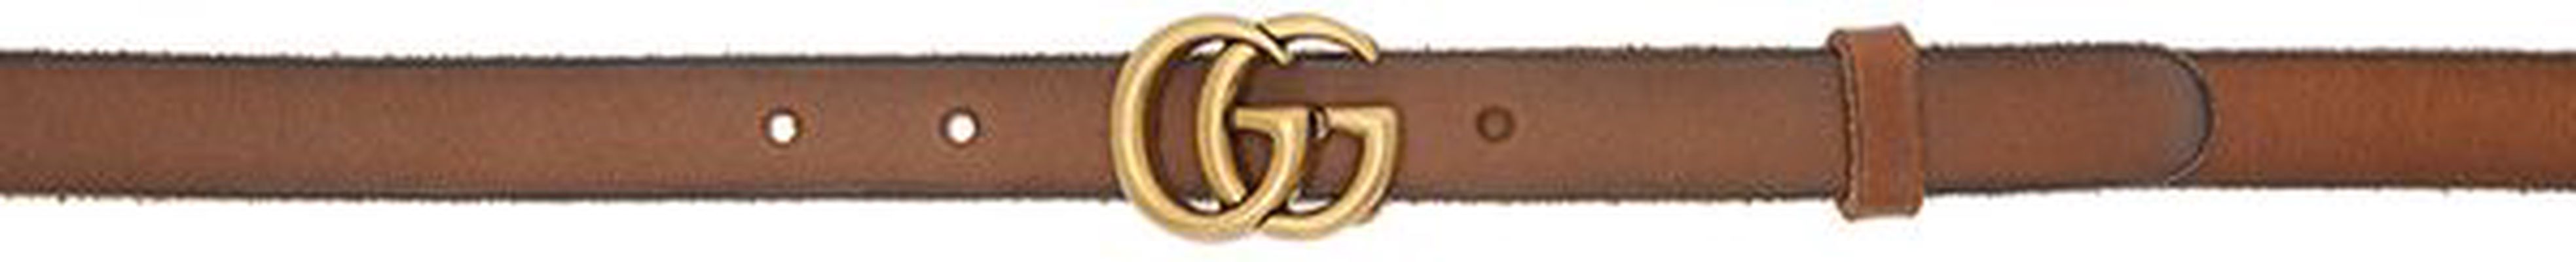 Gucci Brown Thin GG Marmont Belt